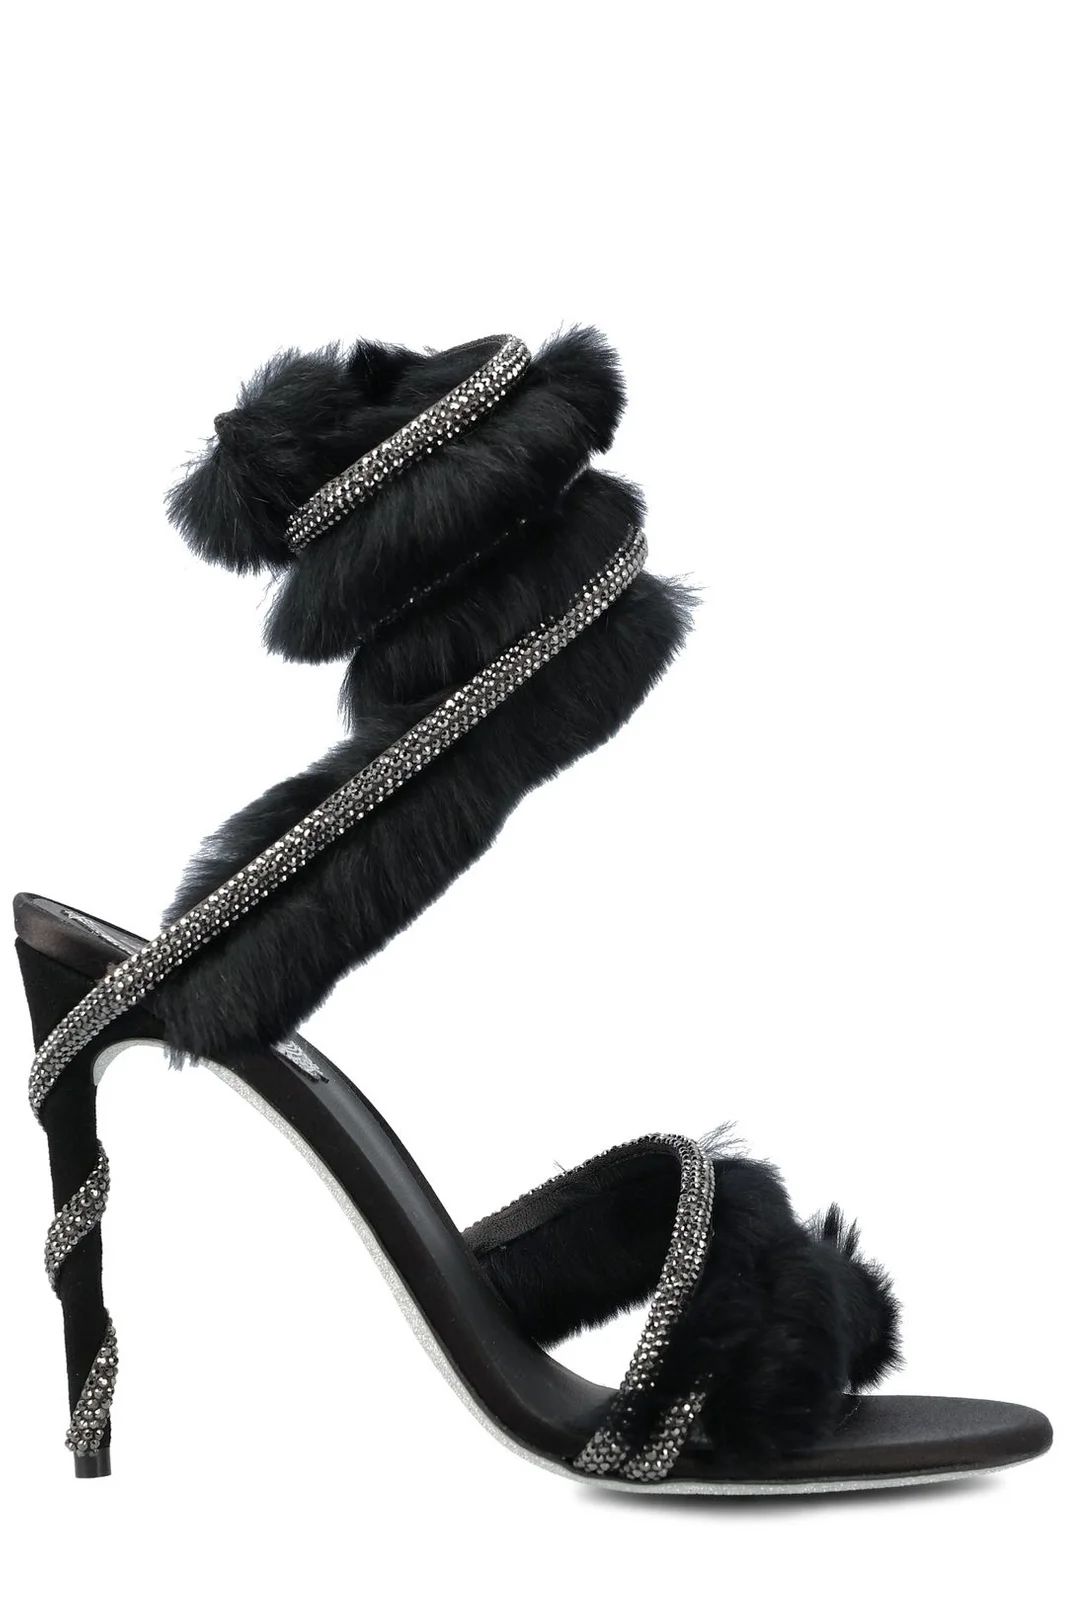 René Caovilla Cleo Embellished Open Toe Sandals | Cettire Global